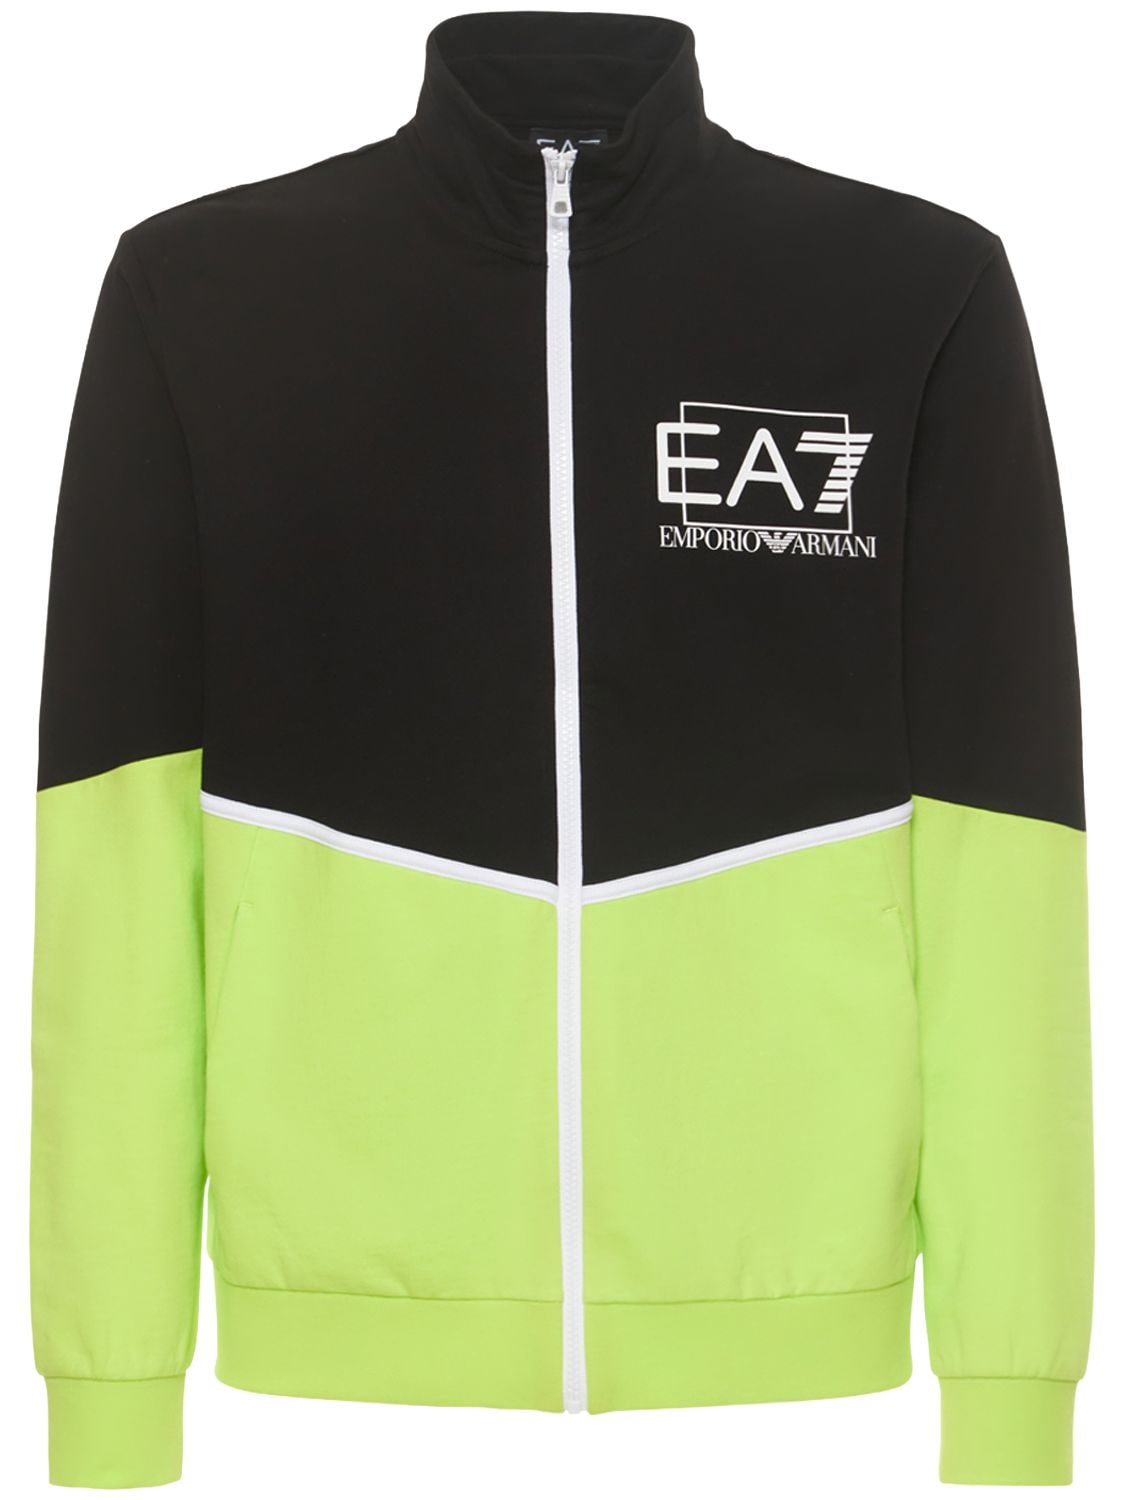 EA7 EMPORIO ARMANI Visibility Cotton French Terry Suit